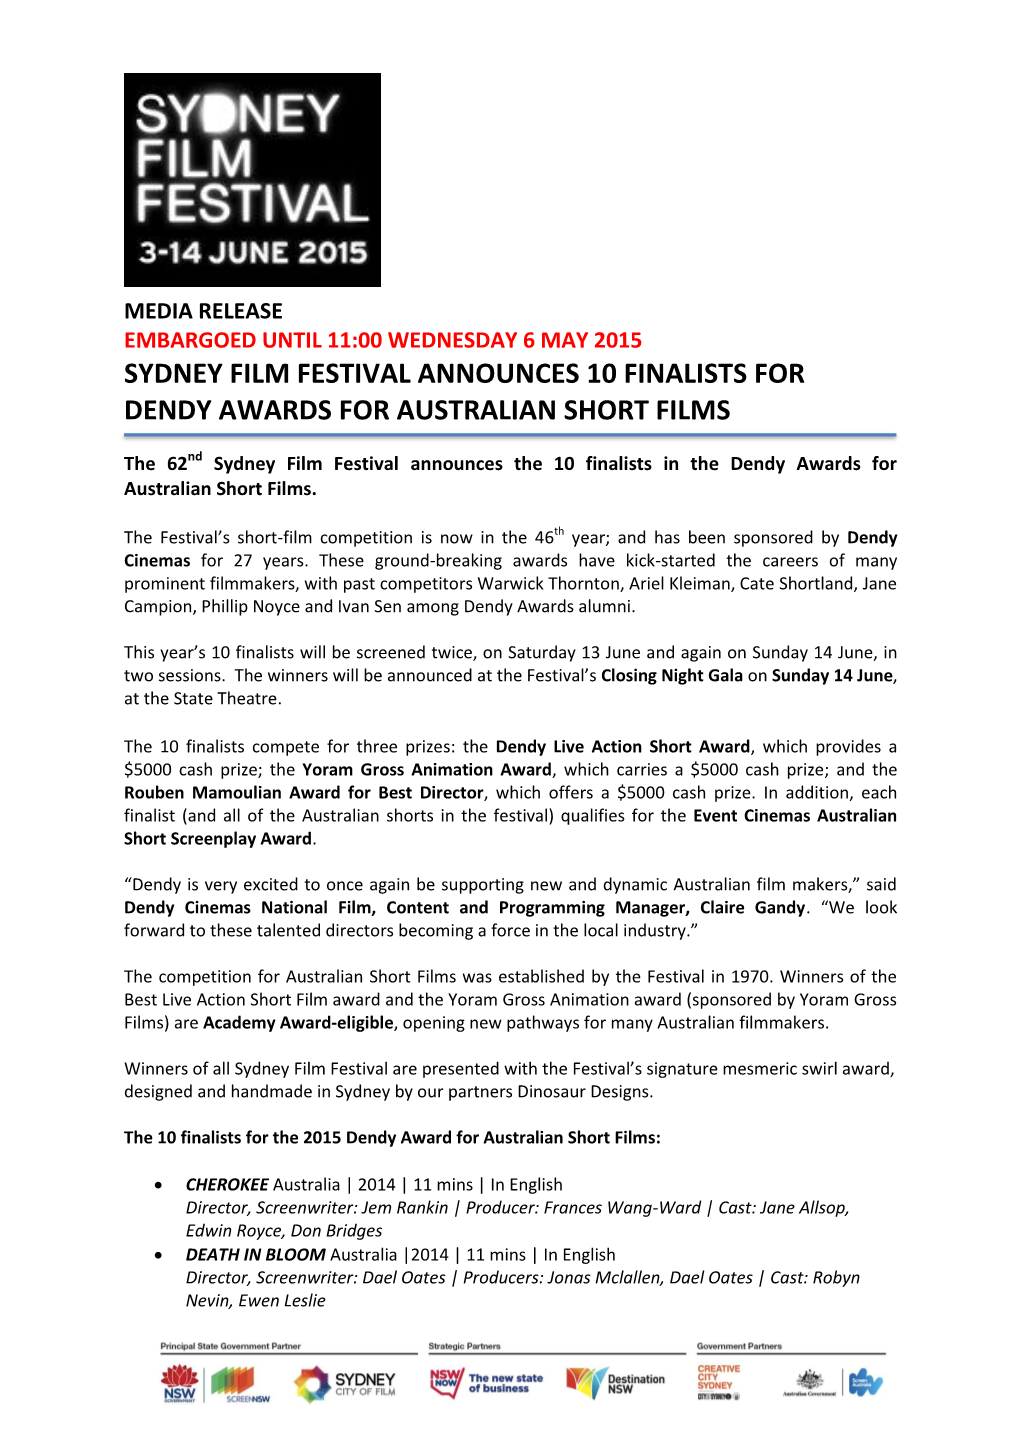 Sydney Film Festival Announces 10 Finalists for Dendy Awards for Australian Short Films